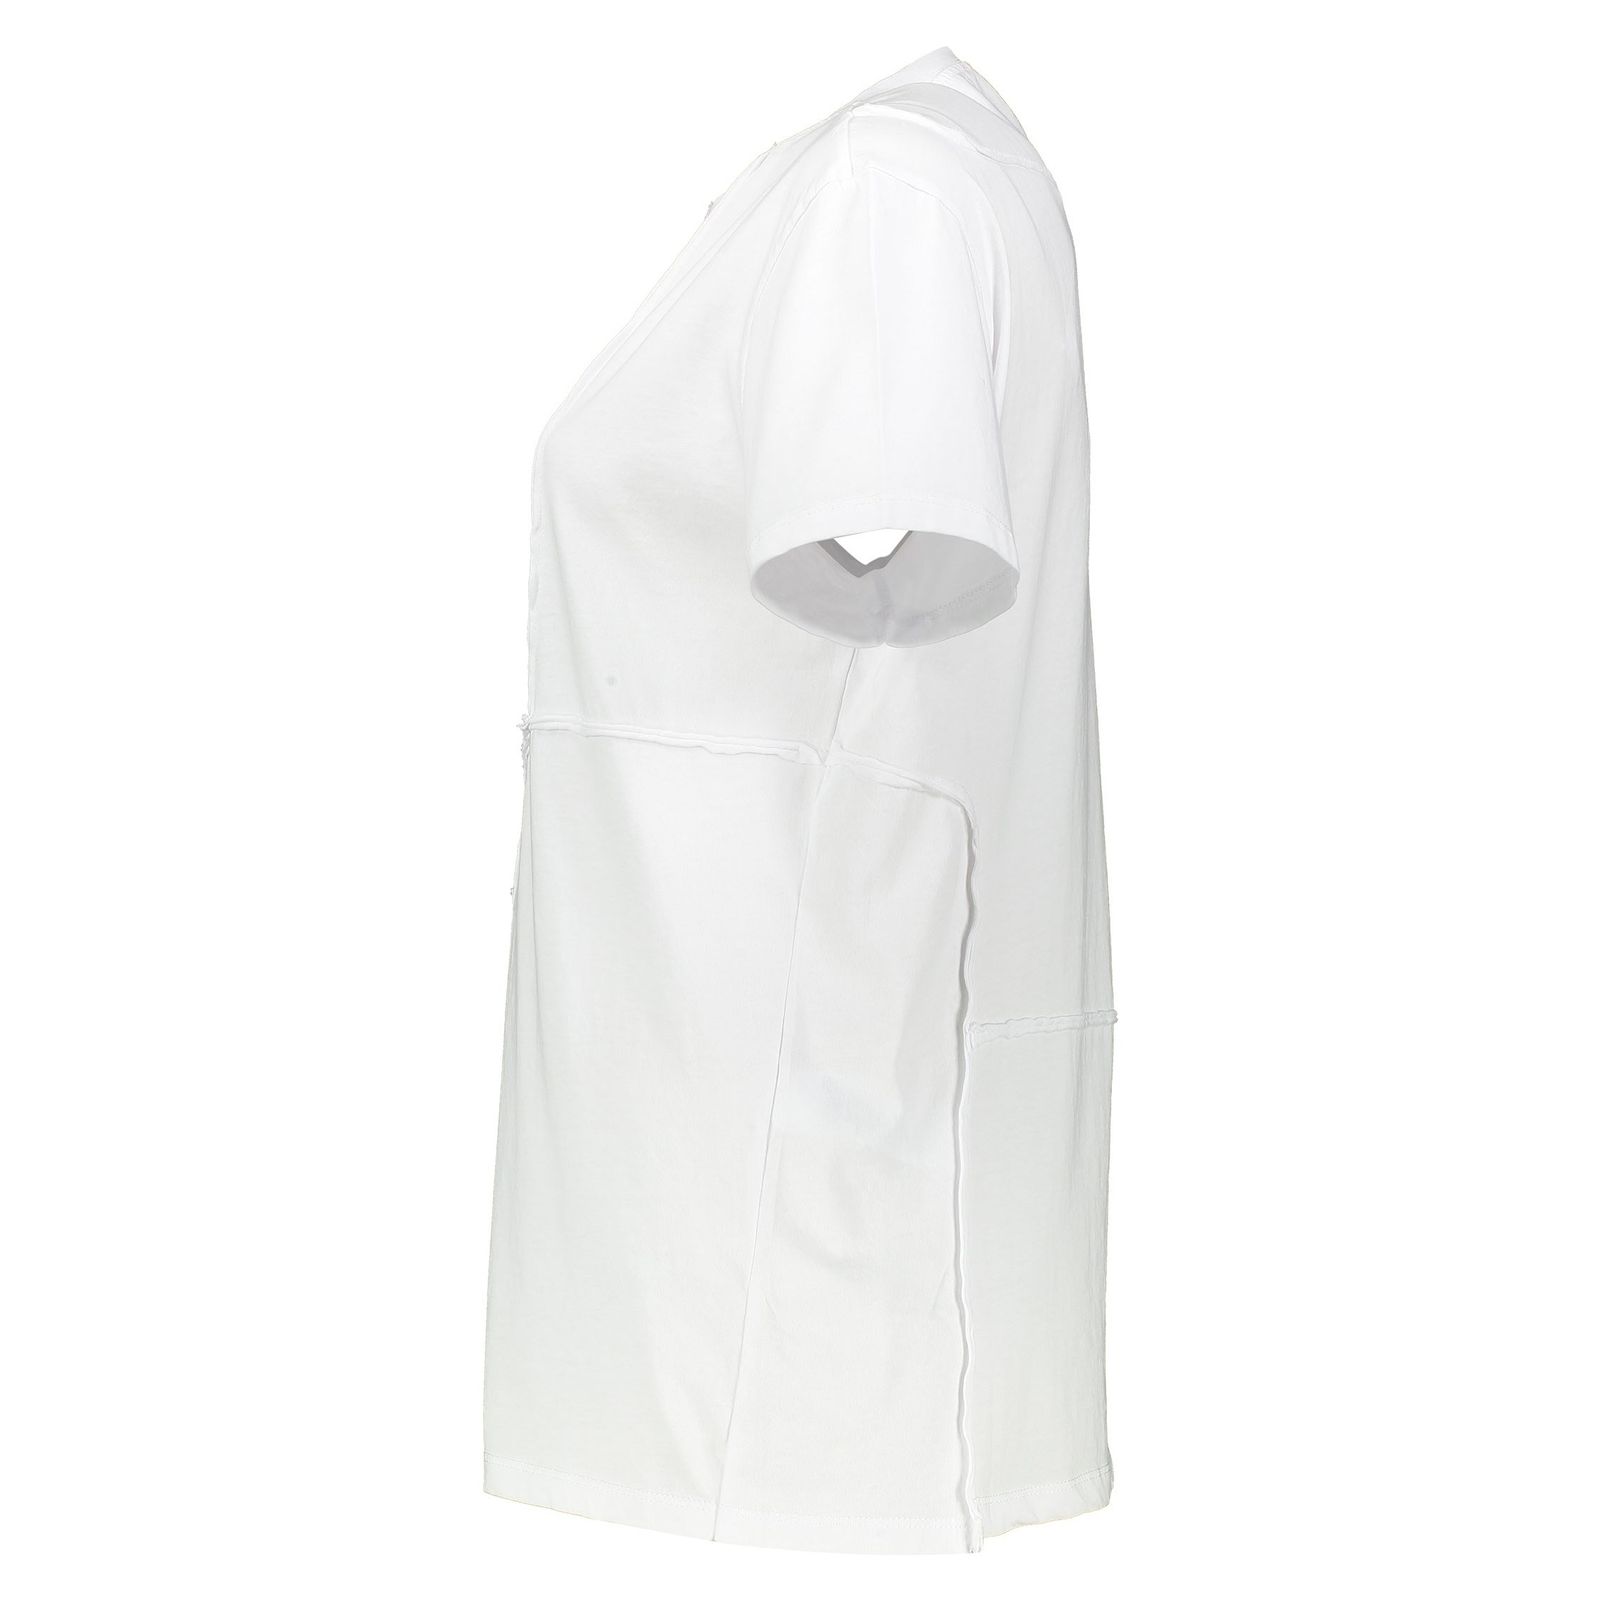 تی شرت نخی یقه گرد مردانه - امپریال - سفيد - 4